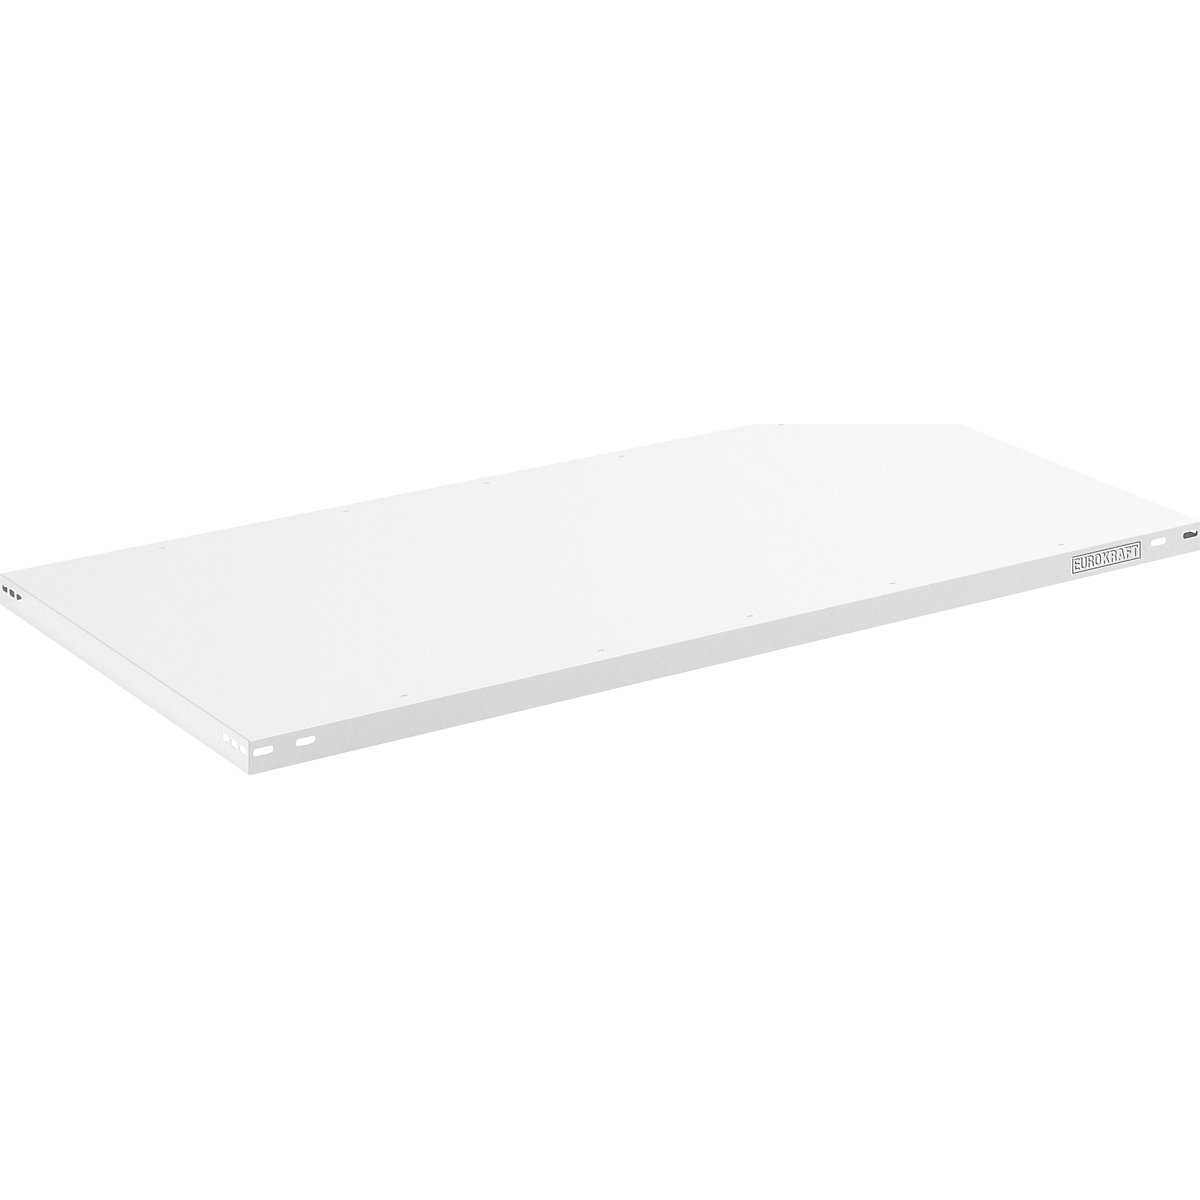 Shelf – eurokraft pro, plastic-coated, WxD 1300 x 800 mm